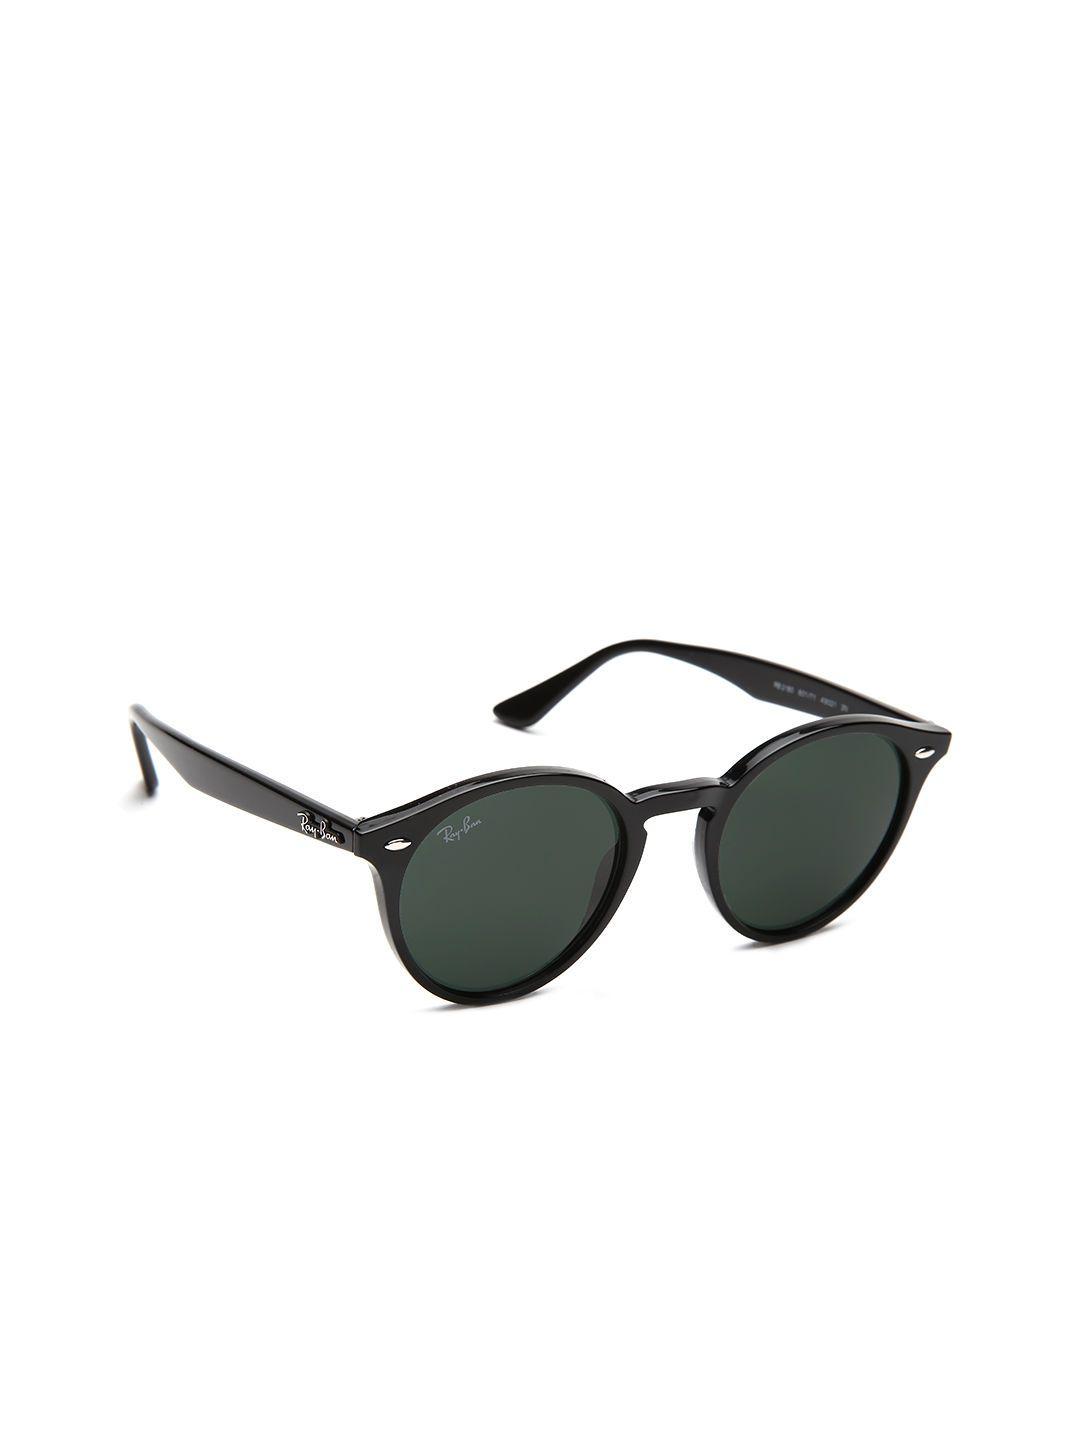 Ray-Ban Unisex Round Sunglasses 0RB2180